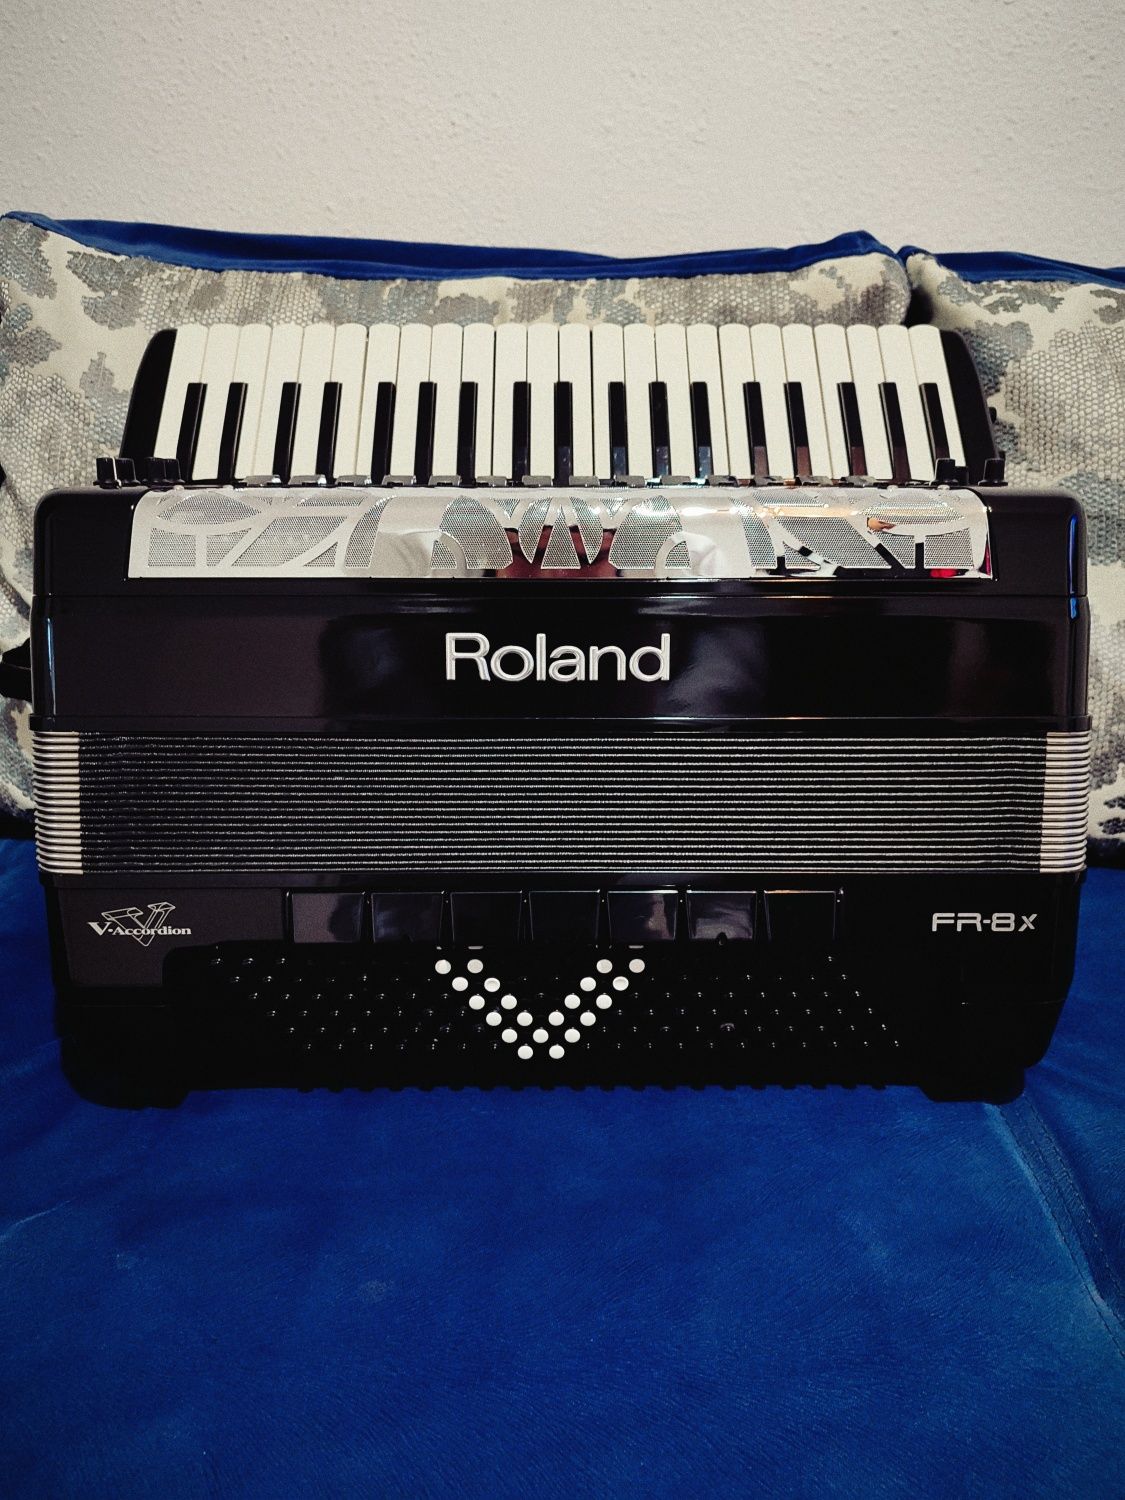 Acordeon Roland FR-8X